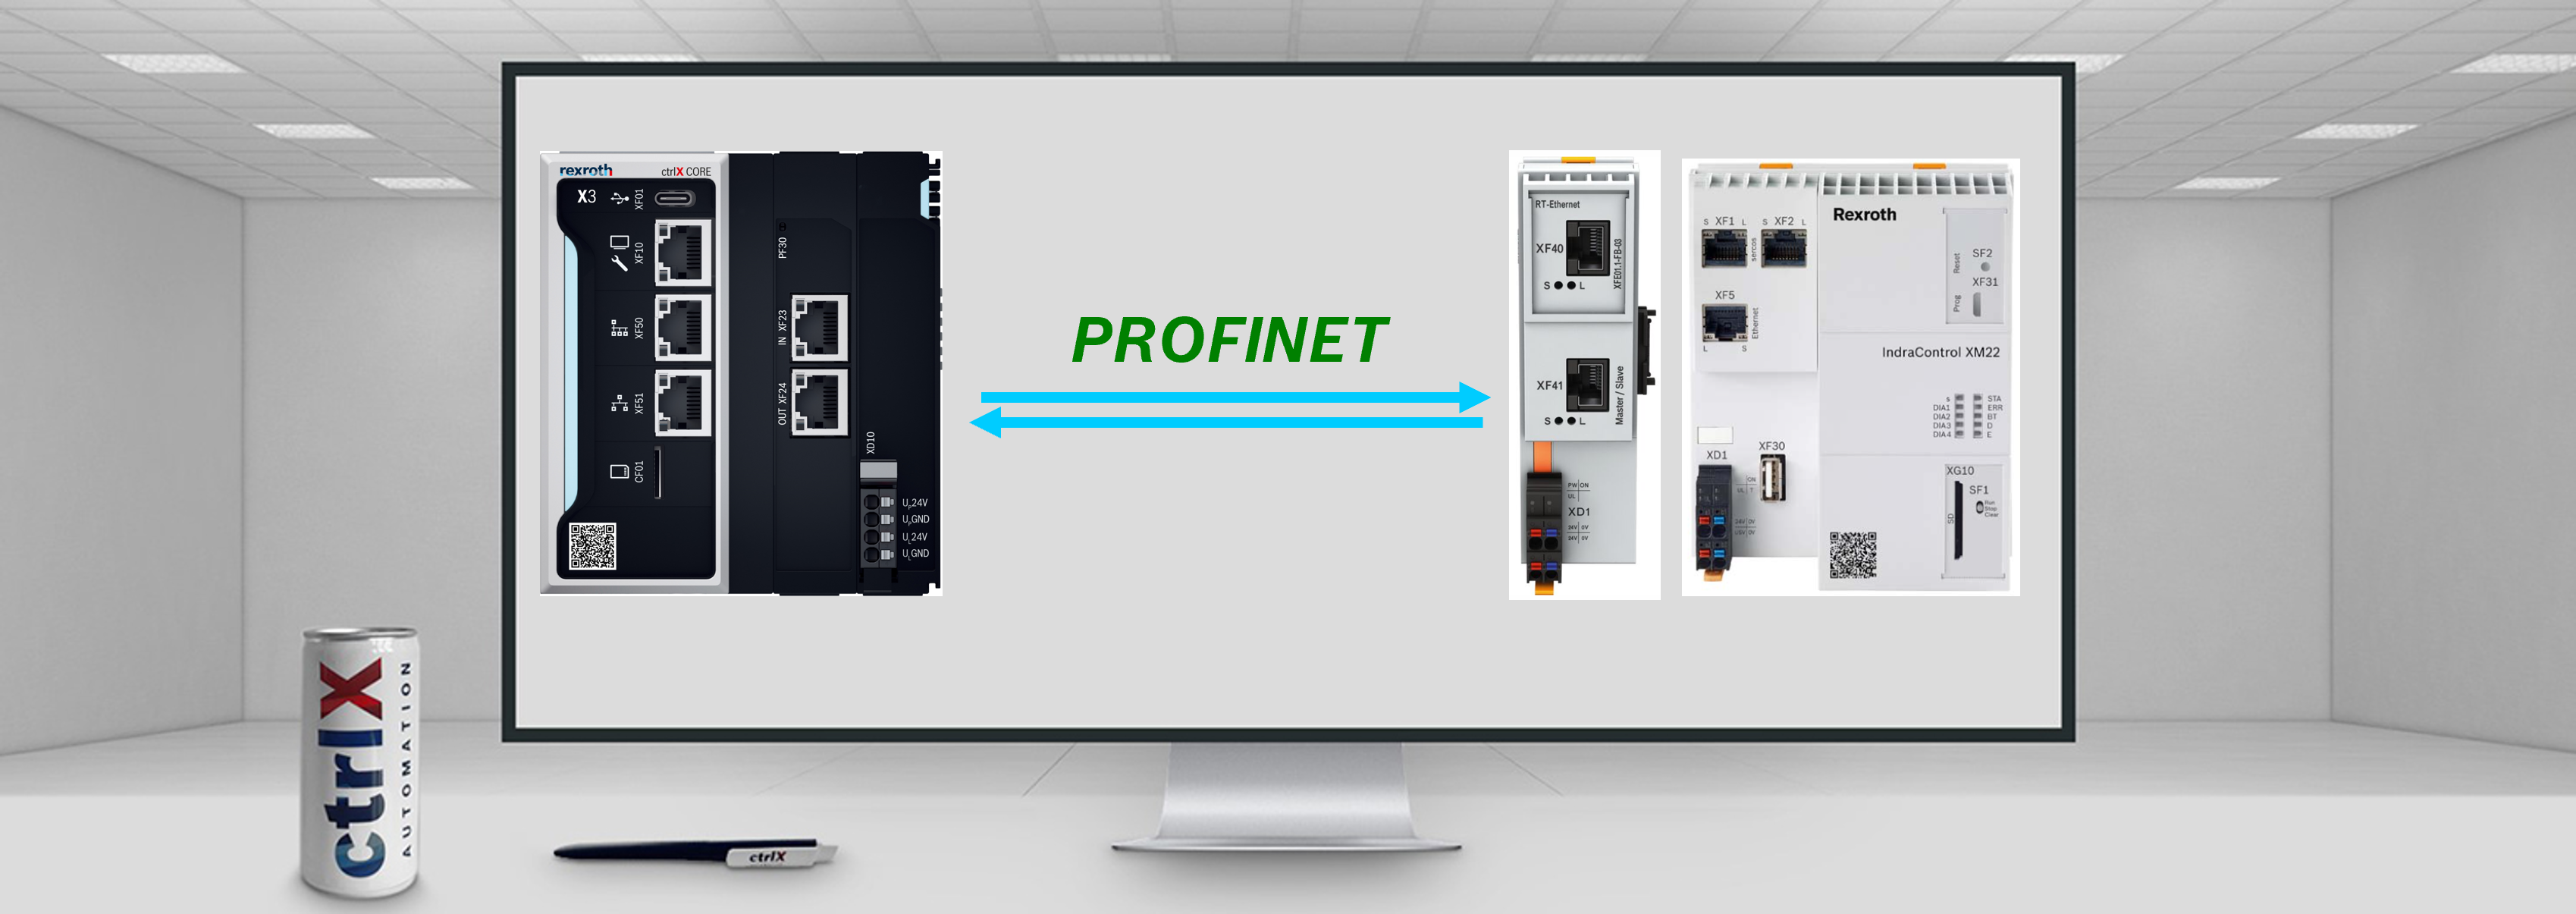 PROFINET IndraControl XM21 ctrlX CORE plus X3 Profinet connection using CoDeSys Fieldbus libraries